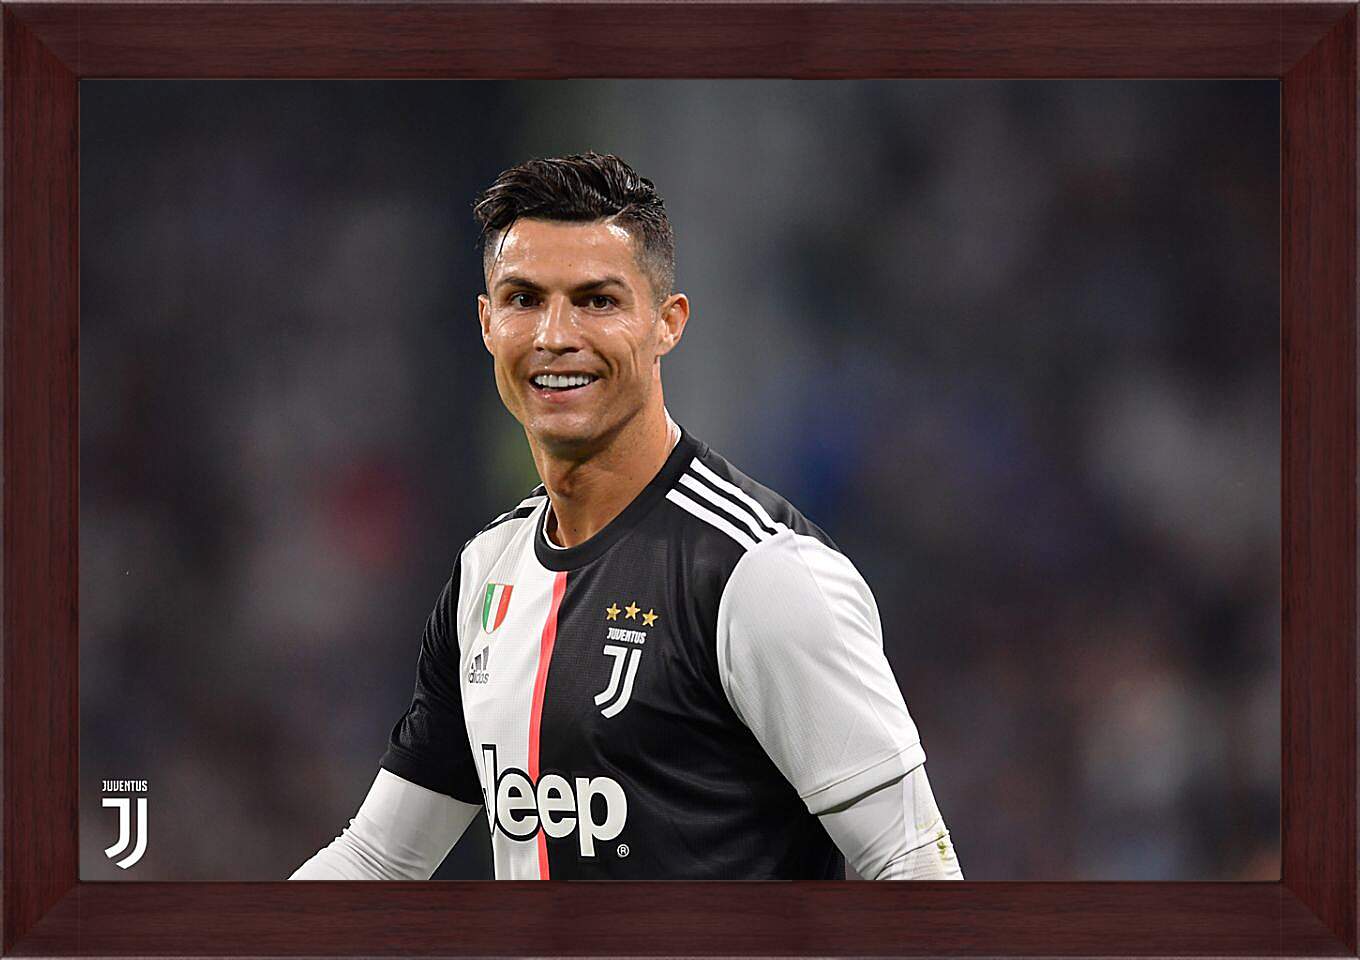 Картина в раме - Криштиану Роналду. Juventus.